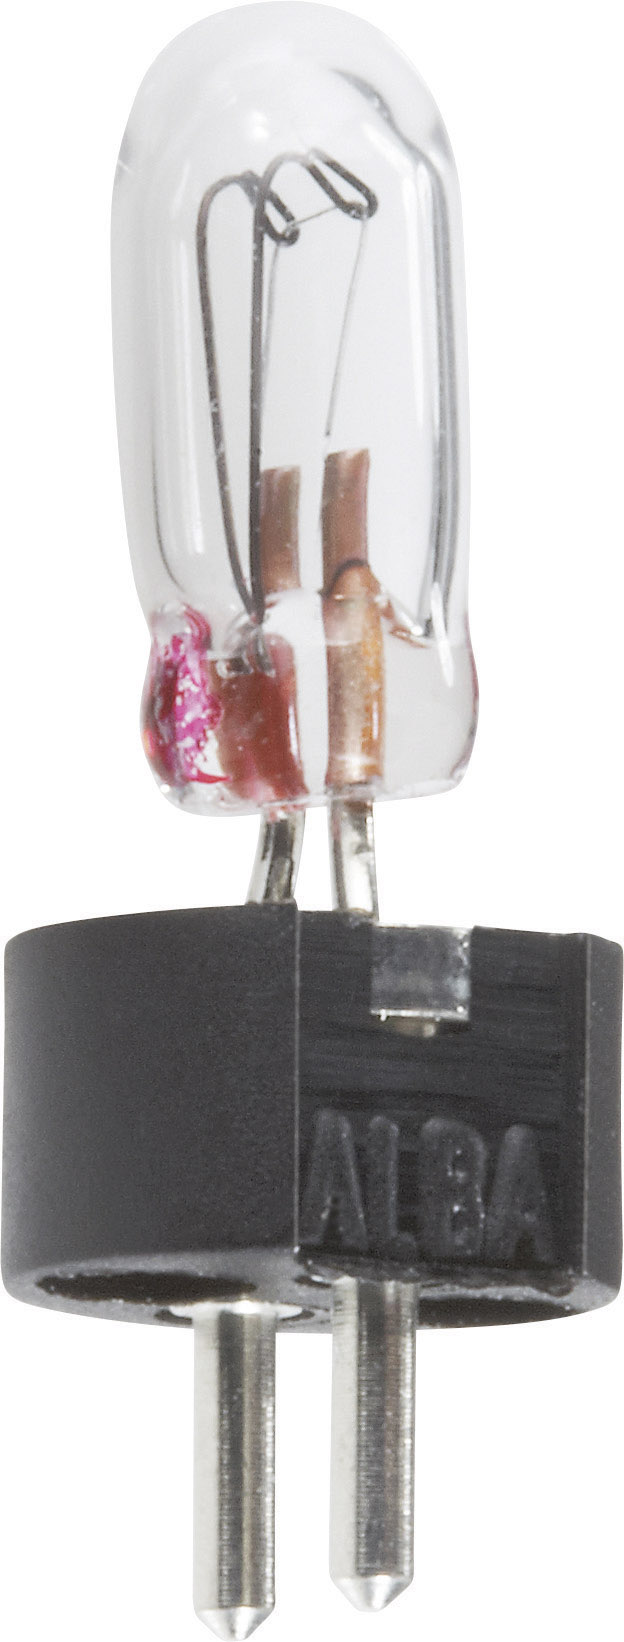 Ampoule en verre avec culot BI-PIN